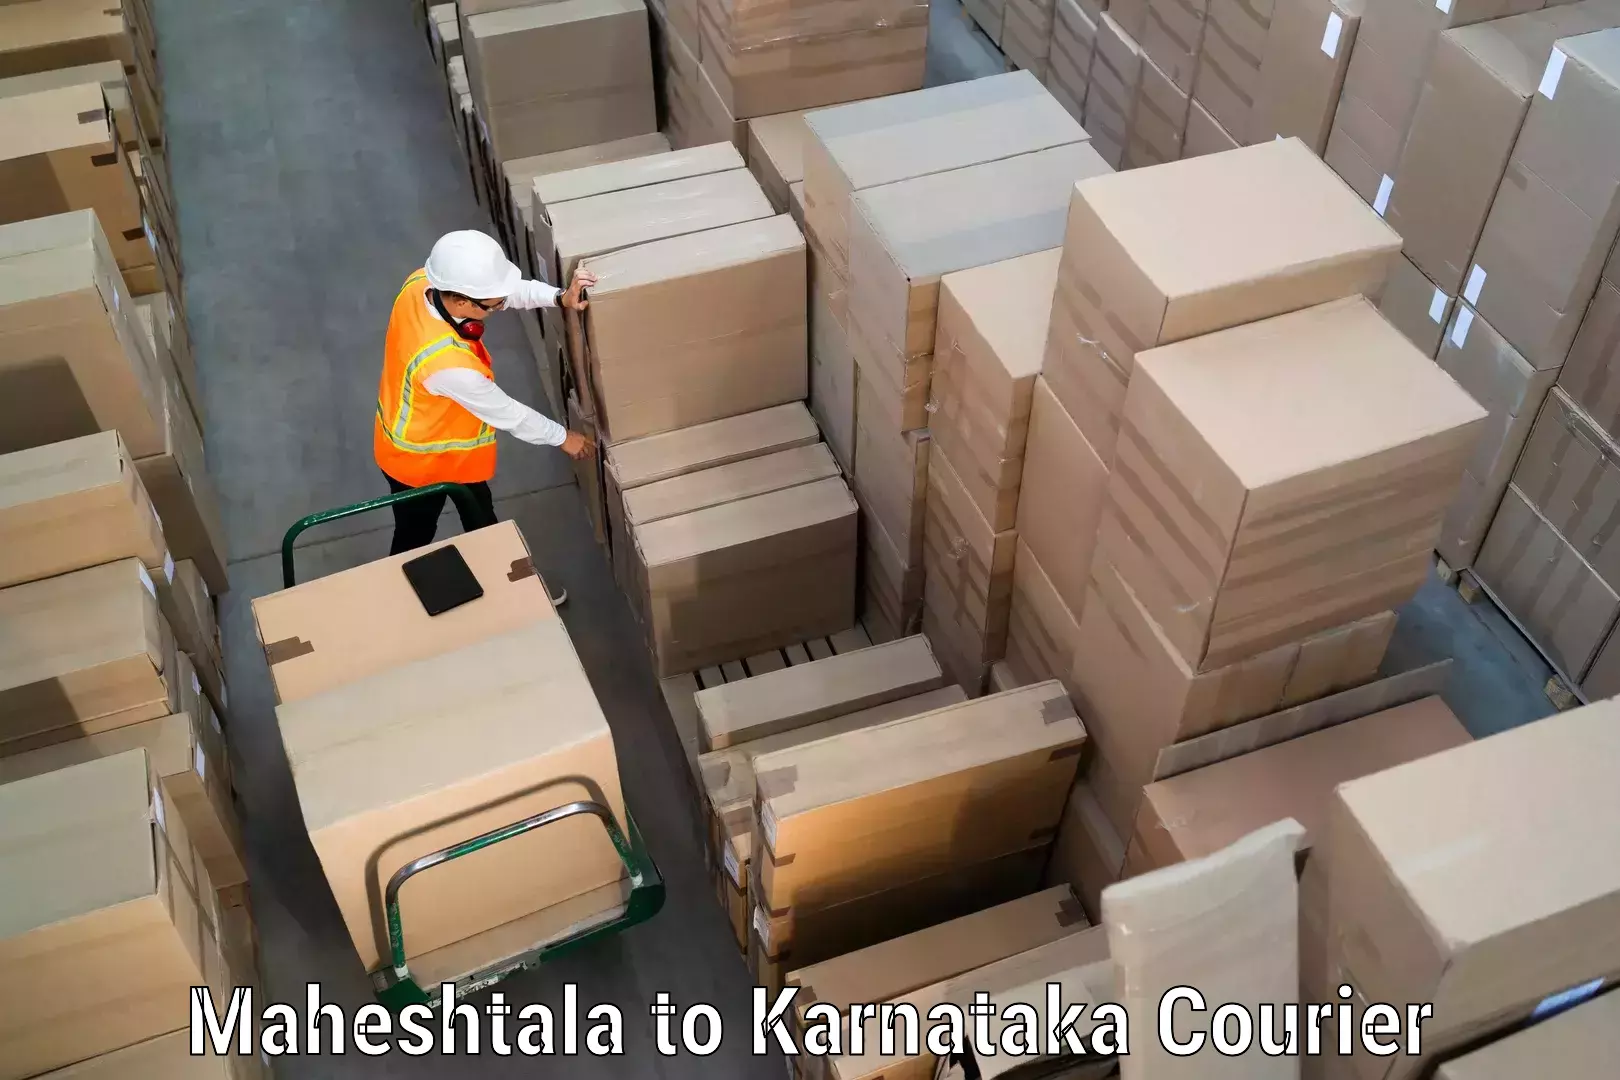 Courier service comparison Maheshtala to Bagepalli